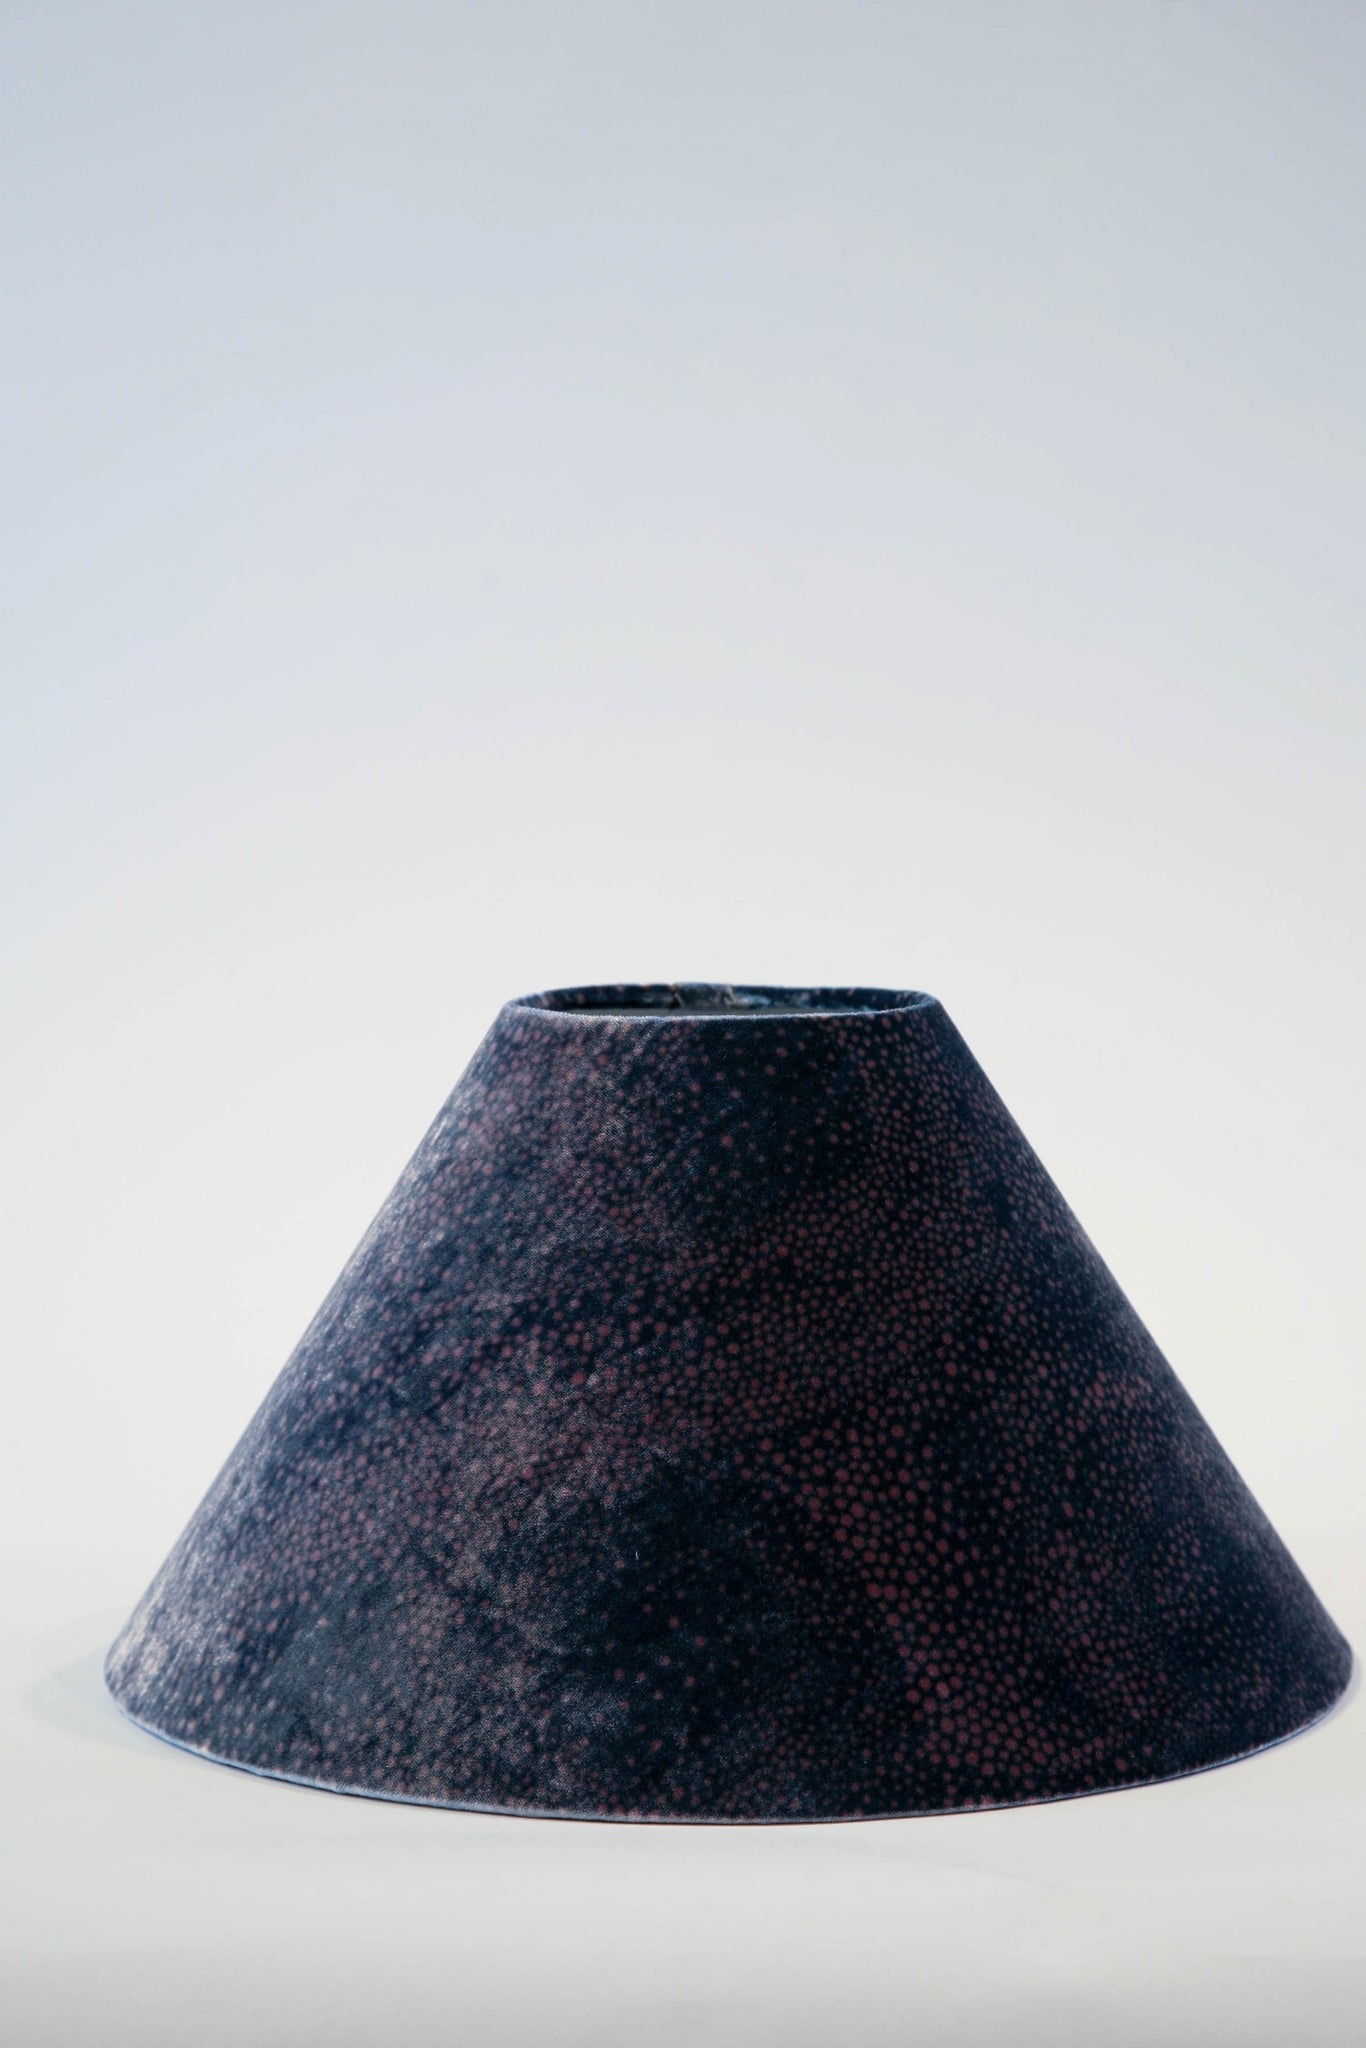 Aurora textile design black and red silk velvet coolie lampshade - by GvE&Co (Georgina von Etzdorf and co)